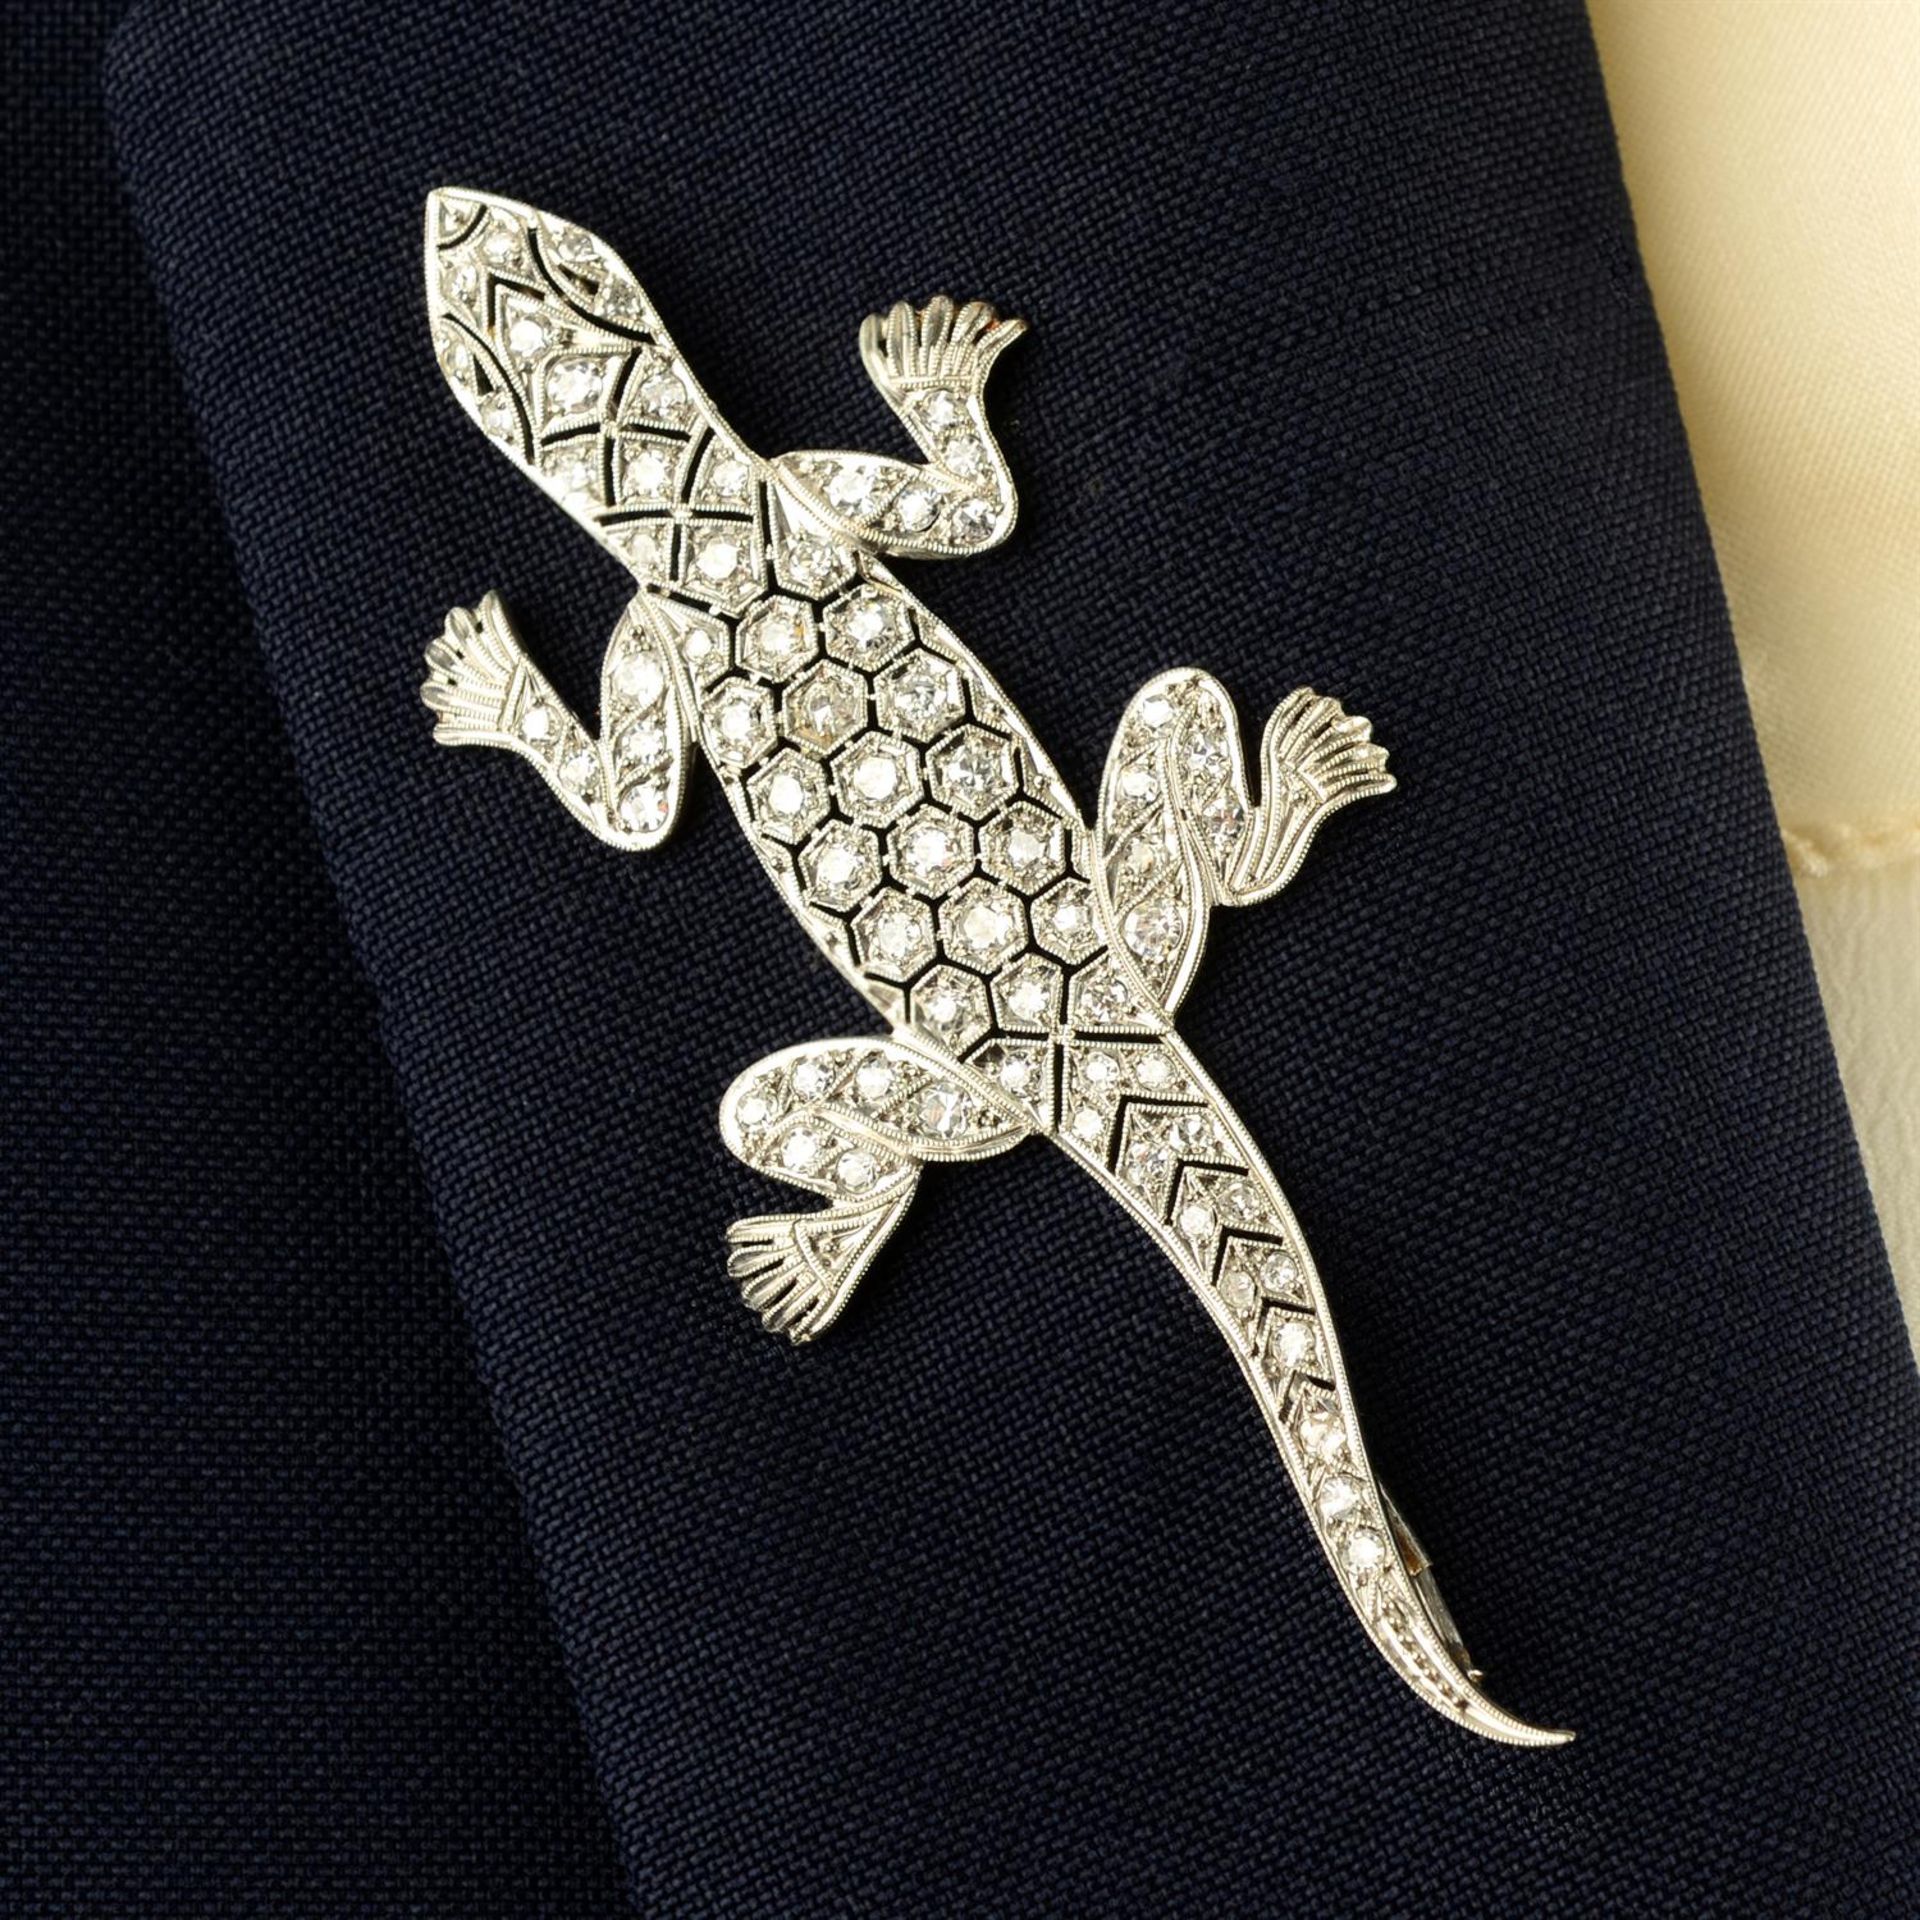 A single-cut diamond lizard brooch.